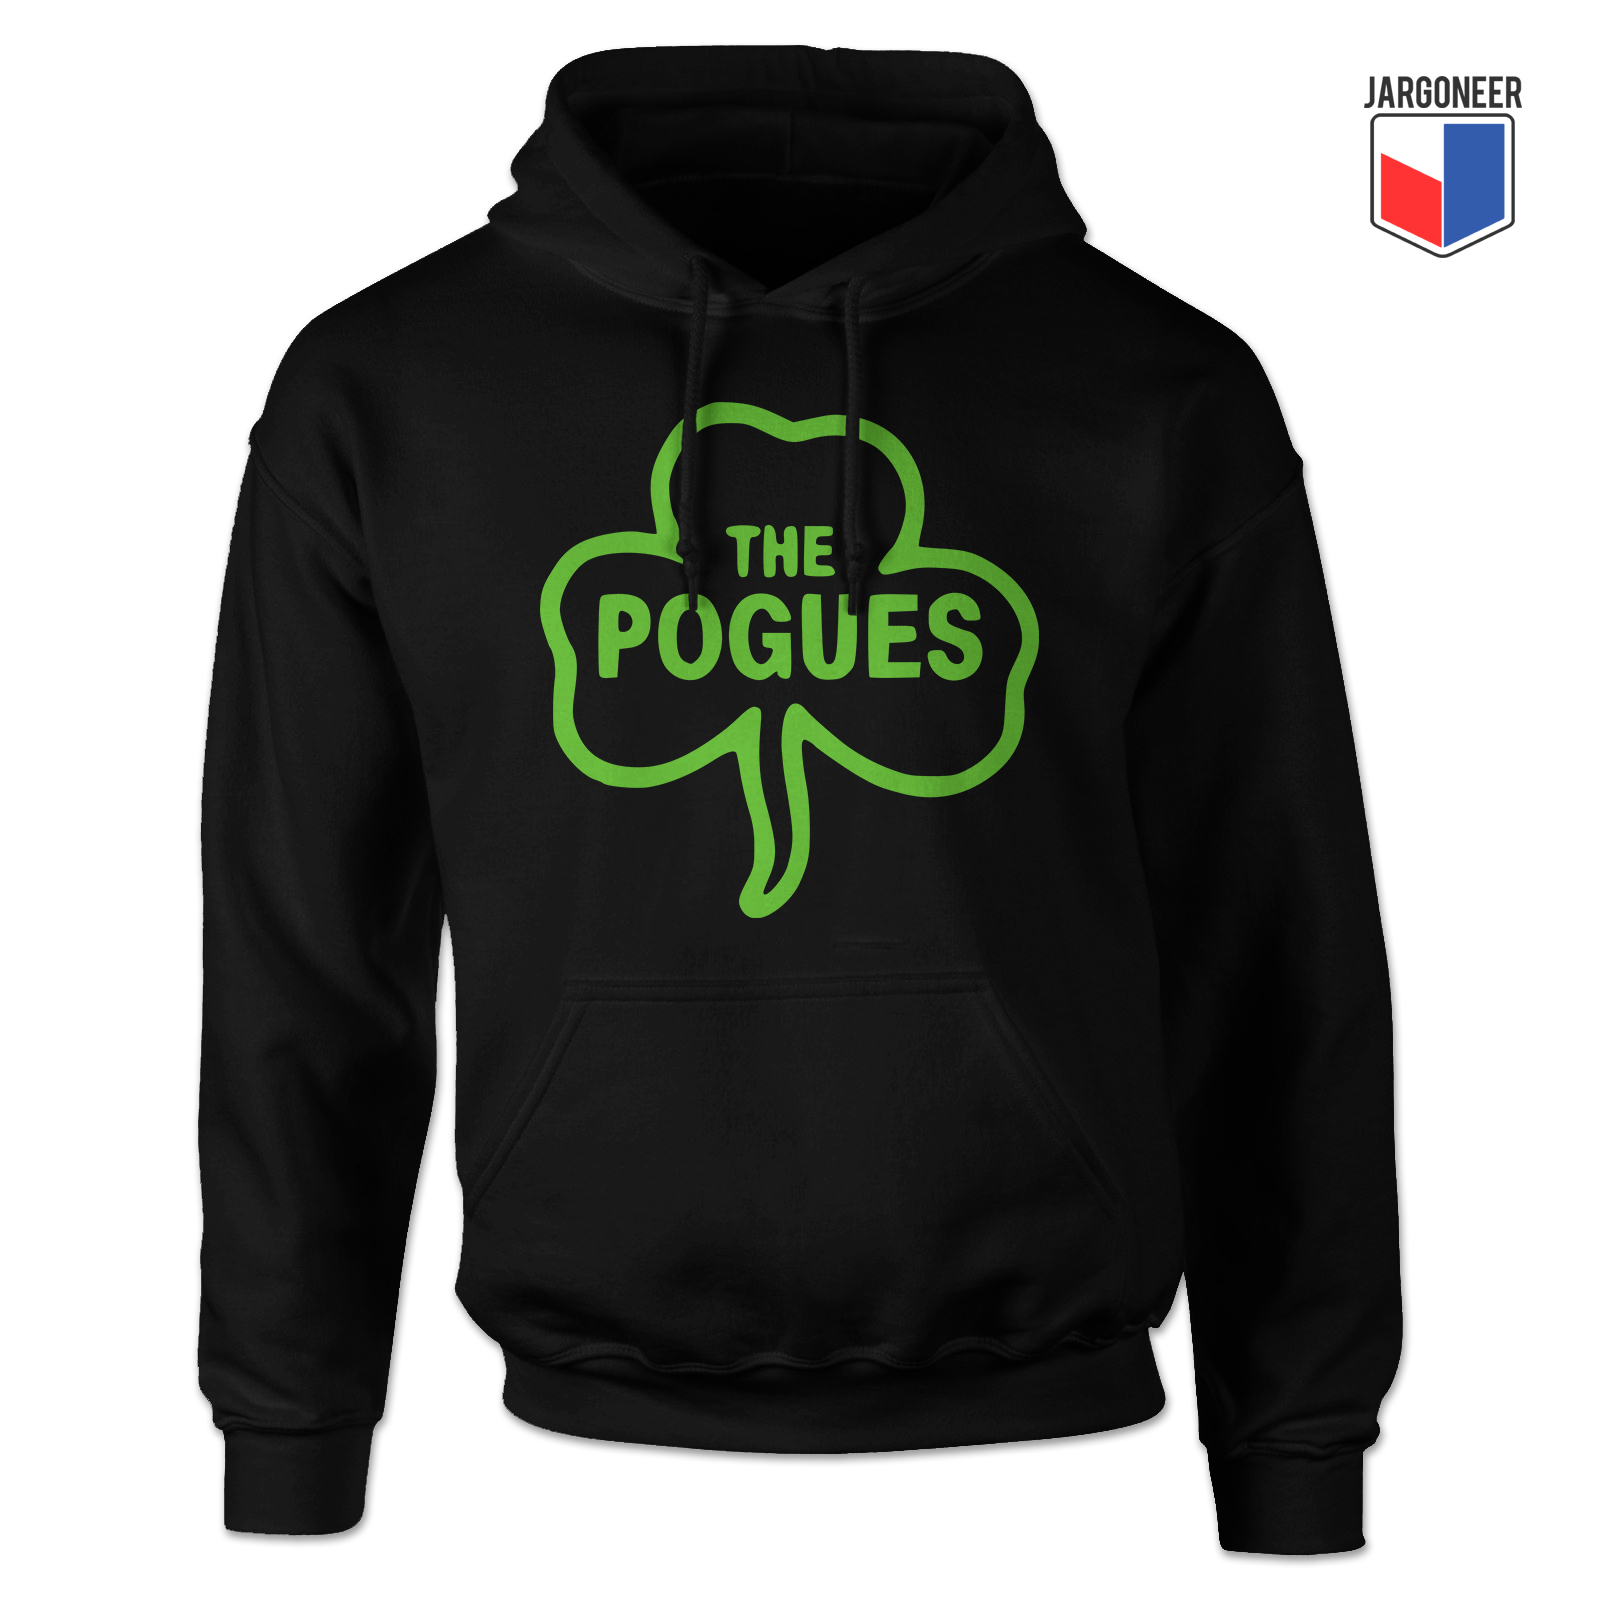 The Pogues Leafe Black Hoody - Shop Unique Graphic Cool Shirt Designs